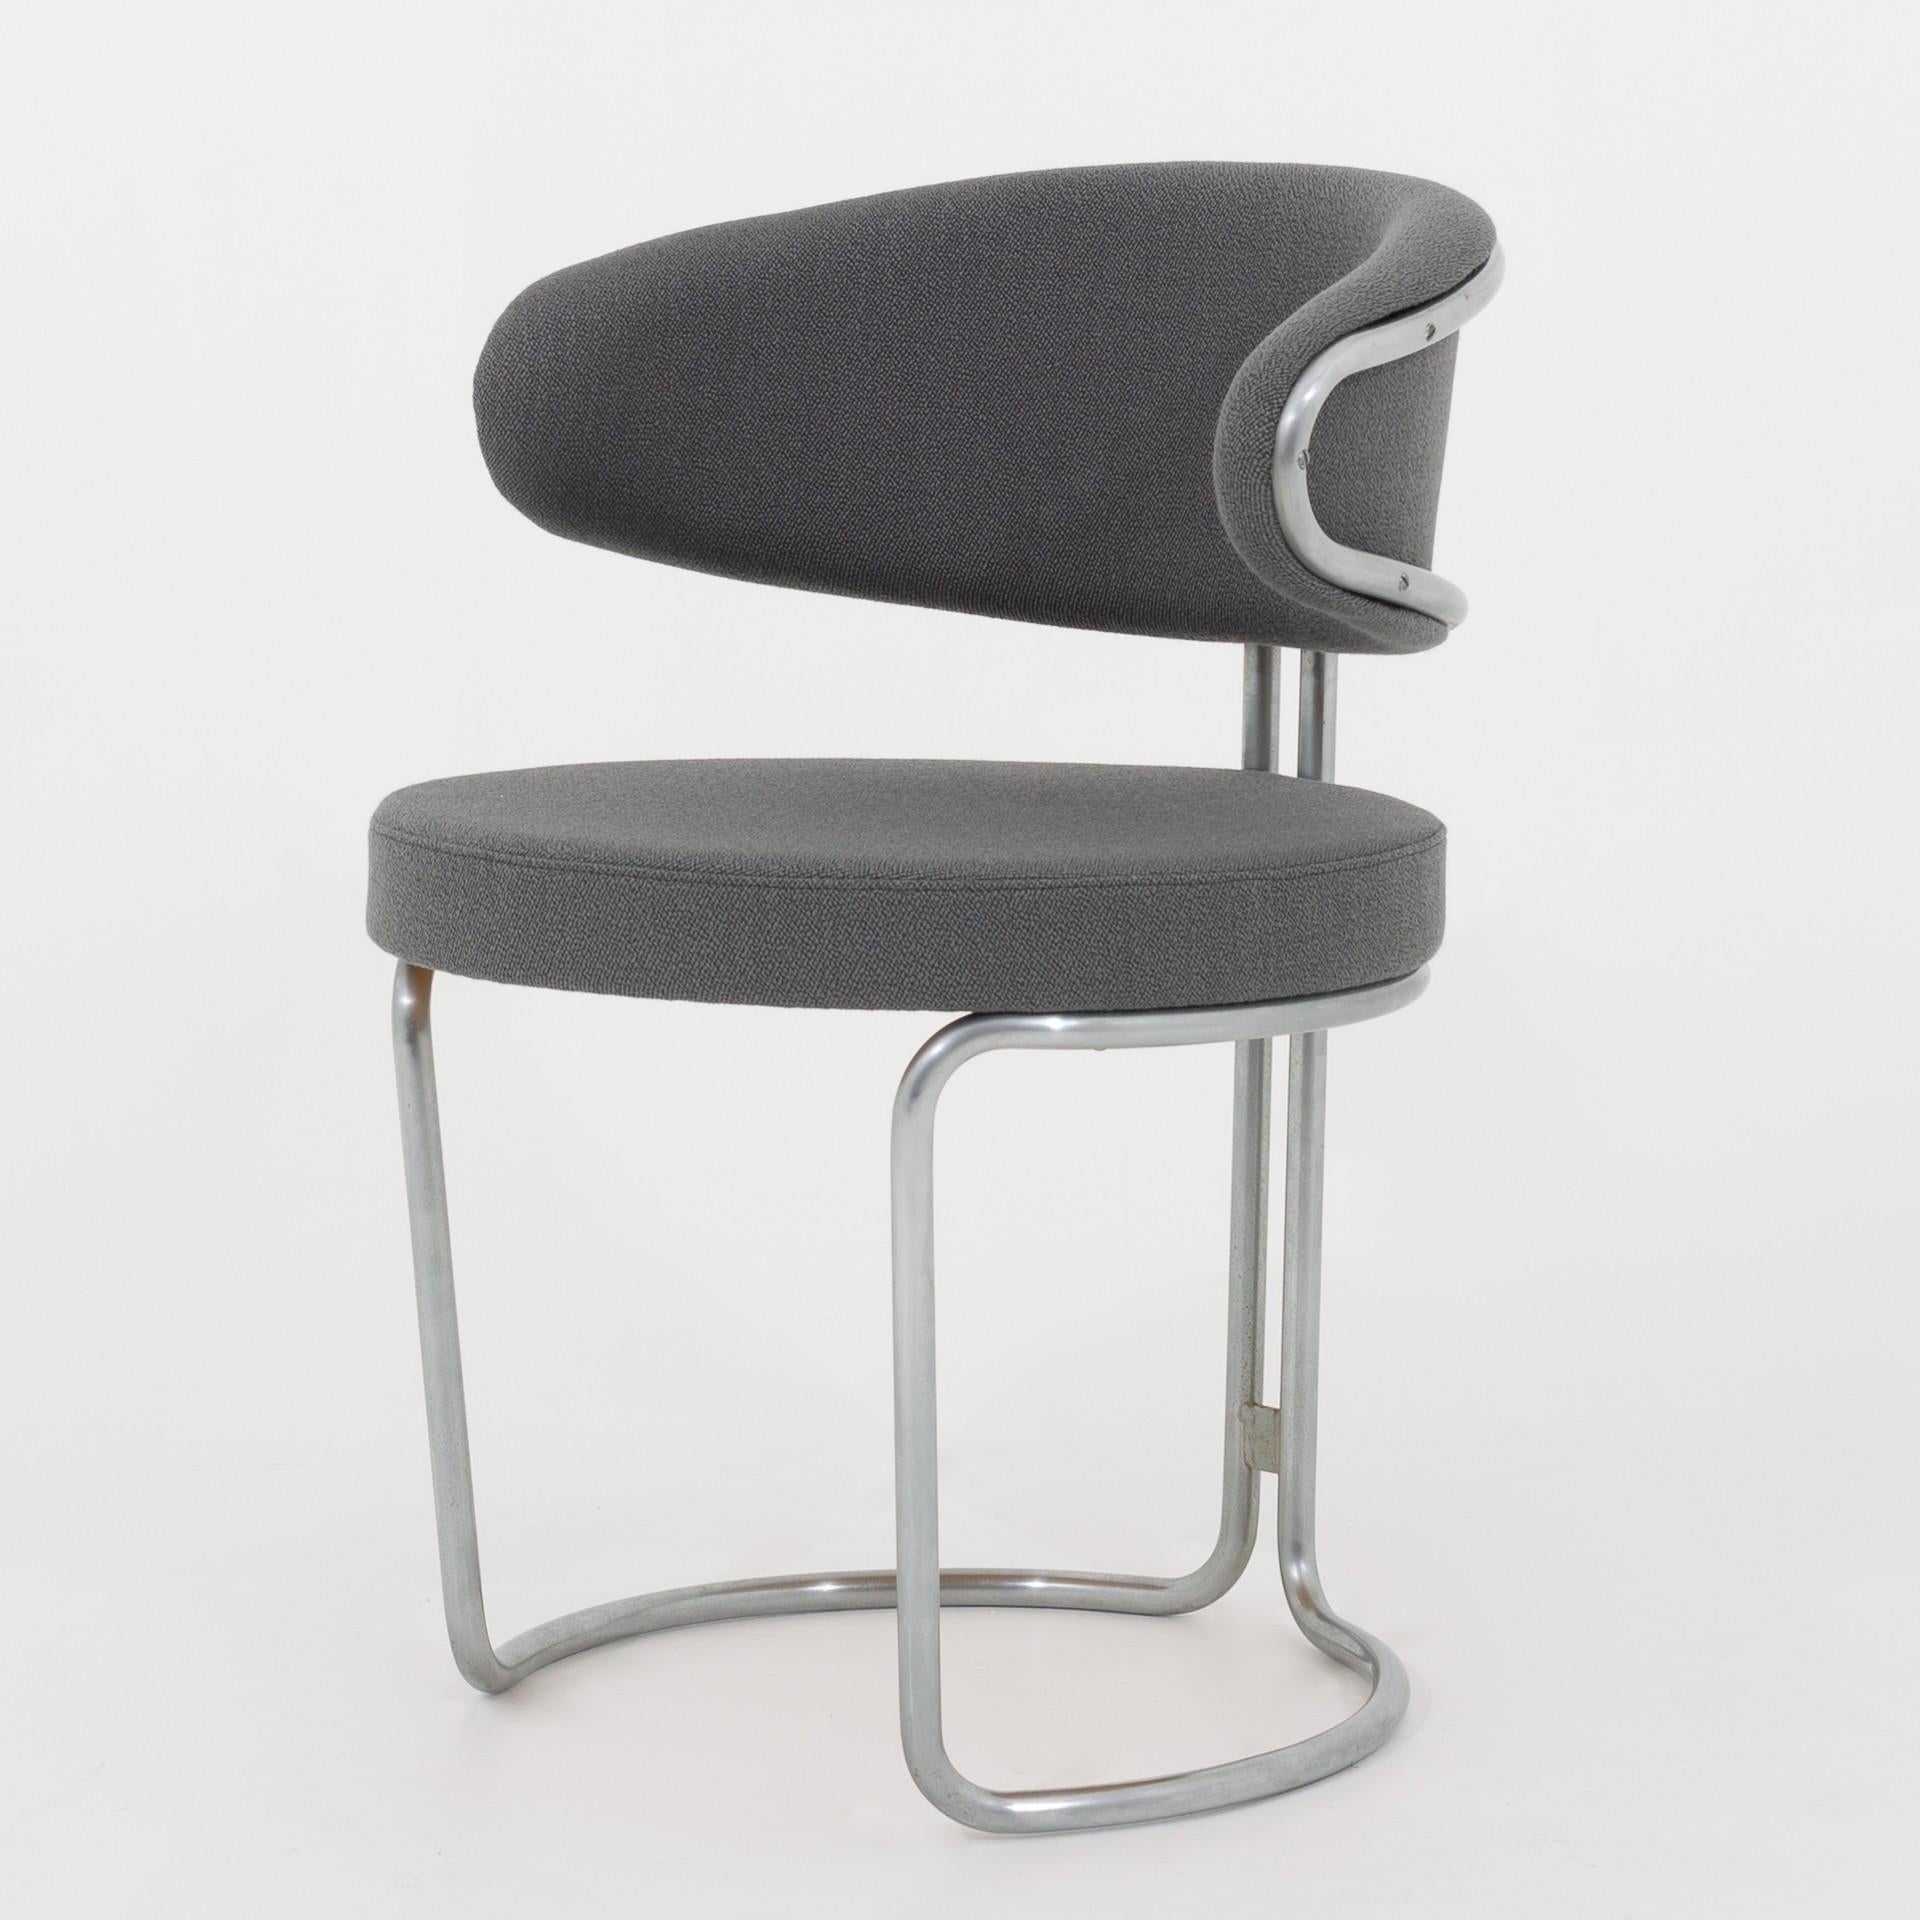 Reupholstered chair in Vida three fabric (code 152) and aluminium frame. Maker Fritz Hansen.